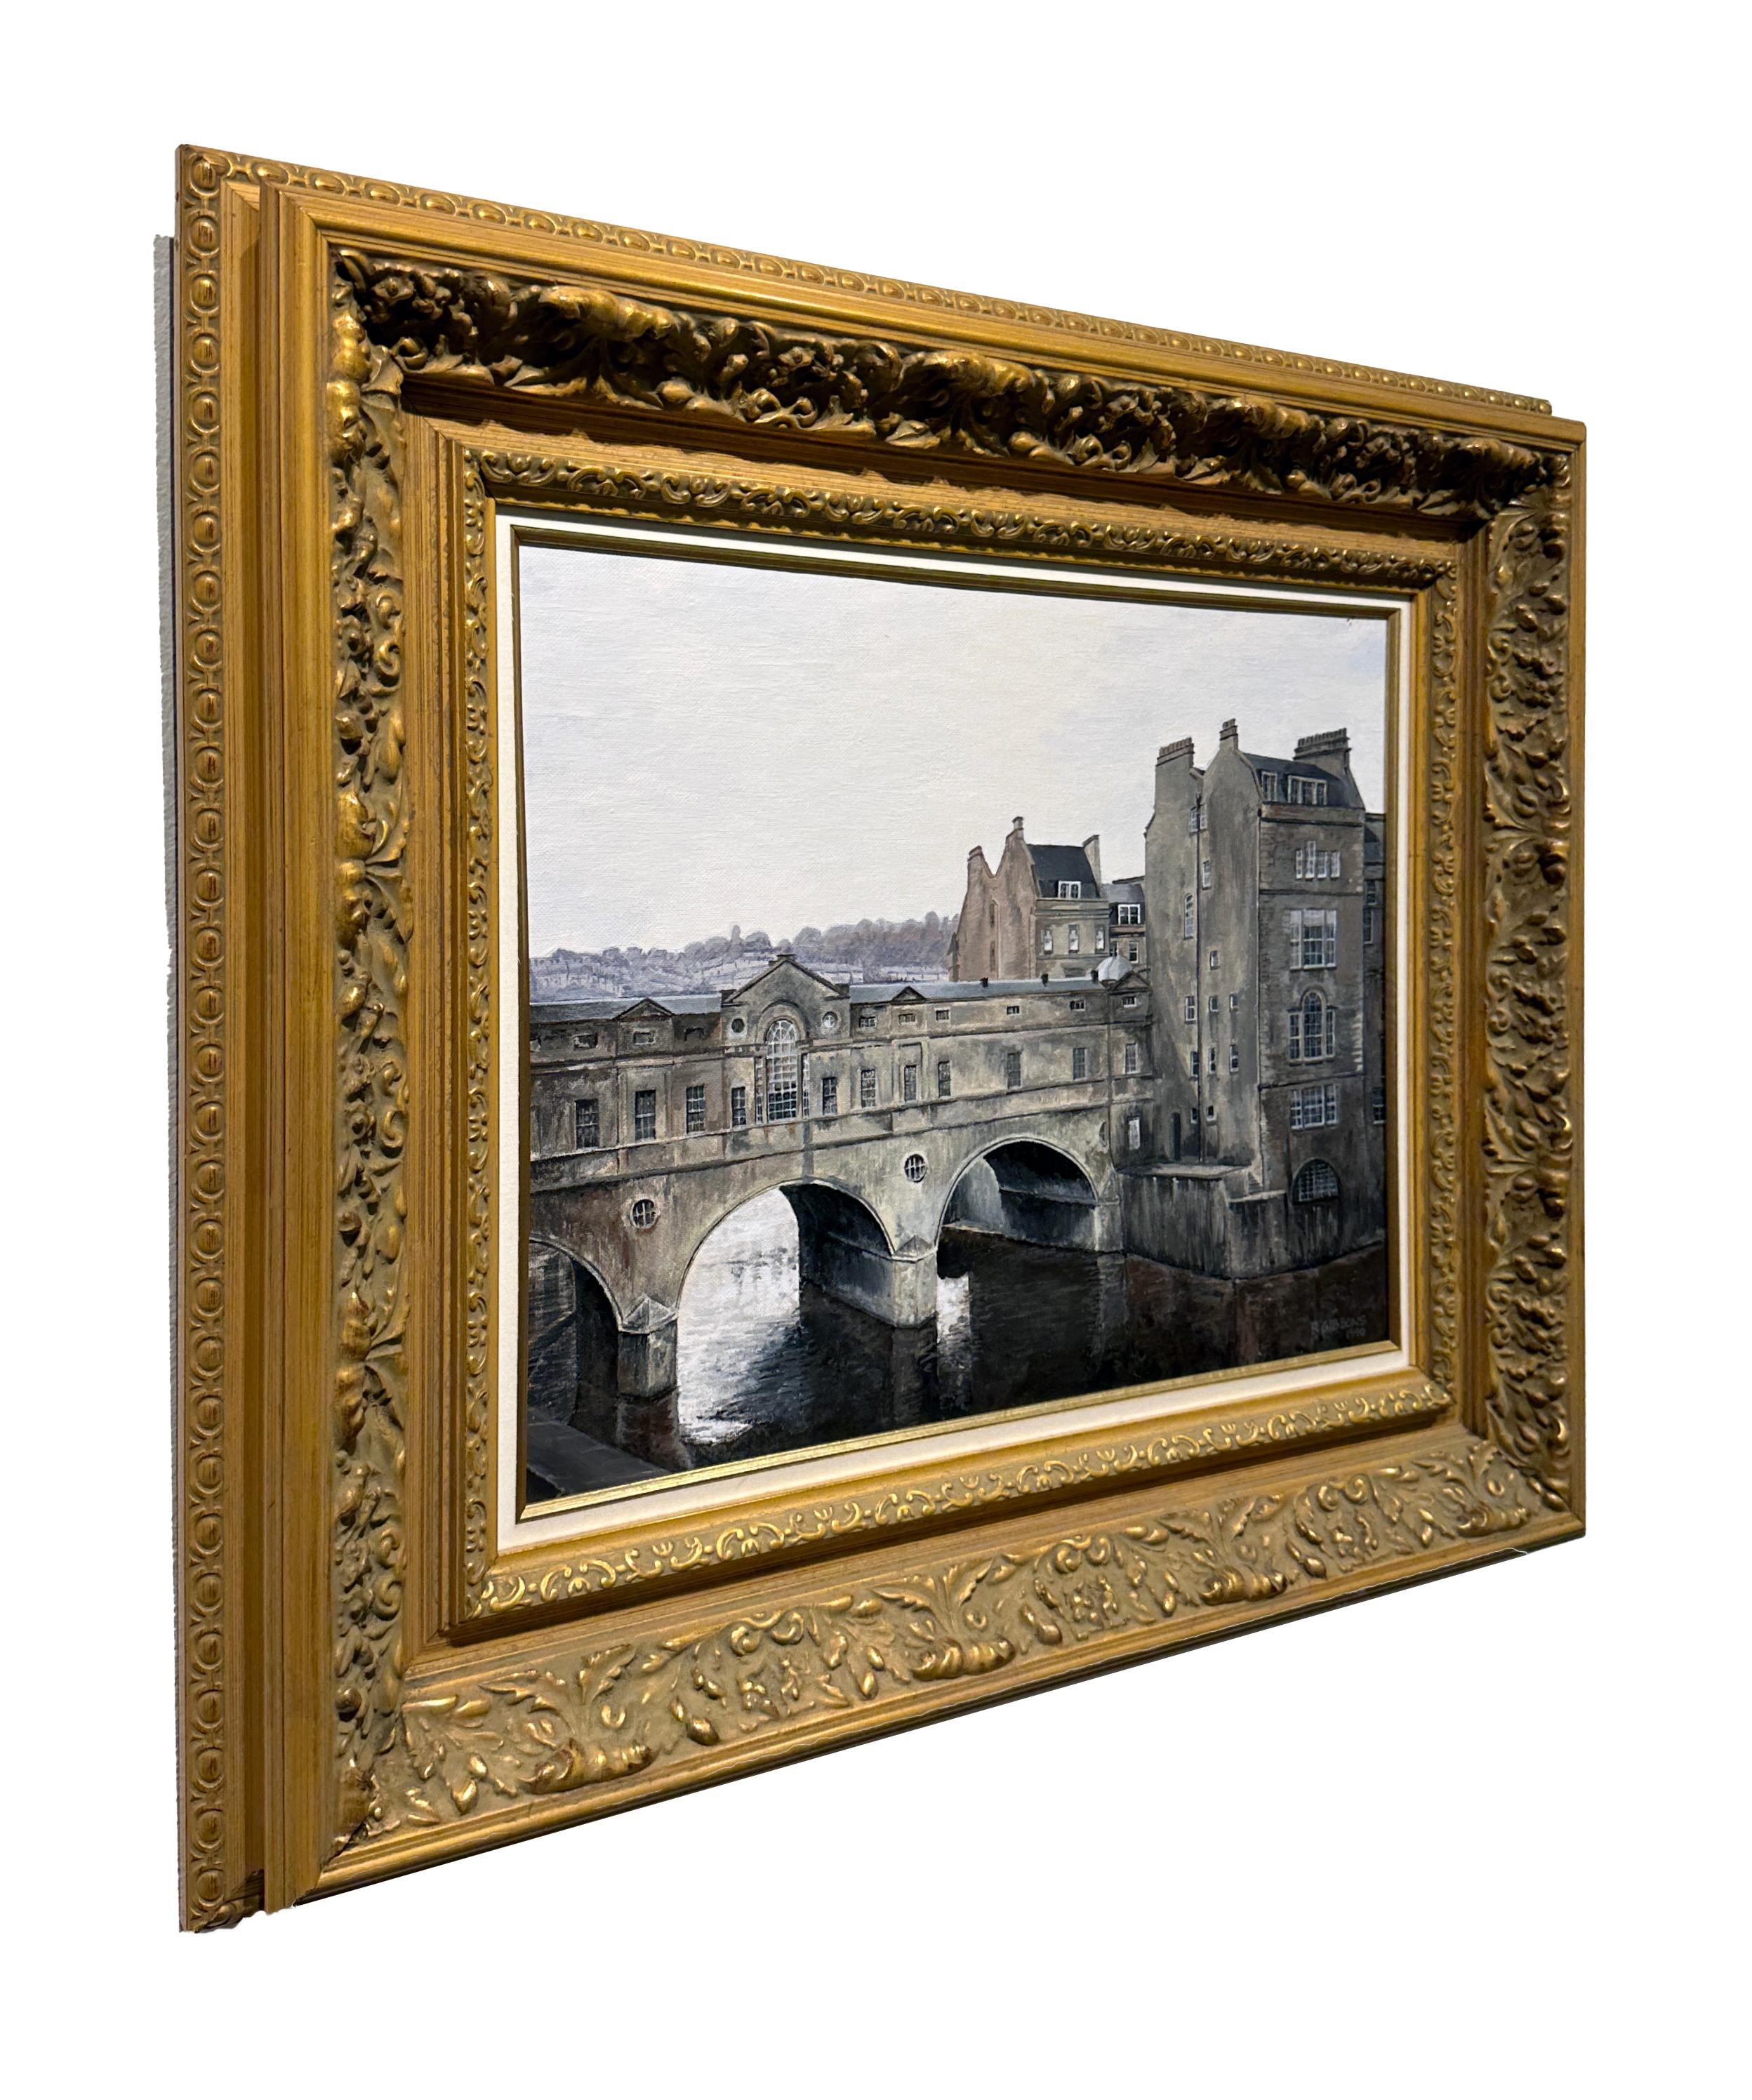 Pulteney Bridge, Bath, England - Framed Landscape, Original Oil on Canvas - Painting by Richard Gibbons